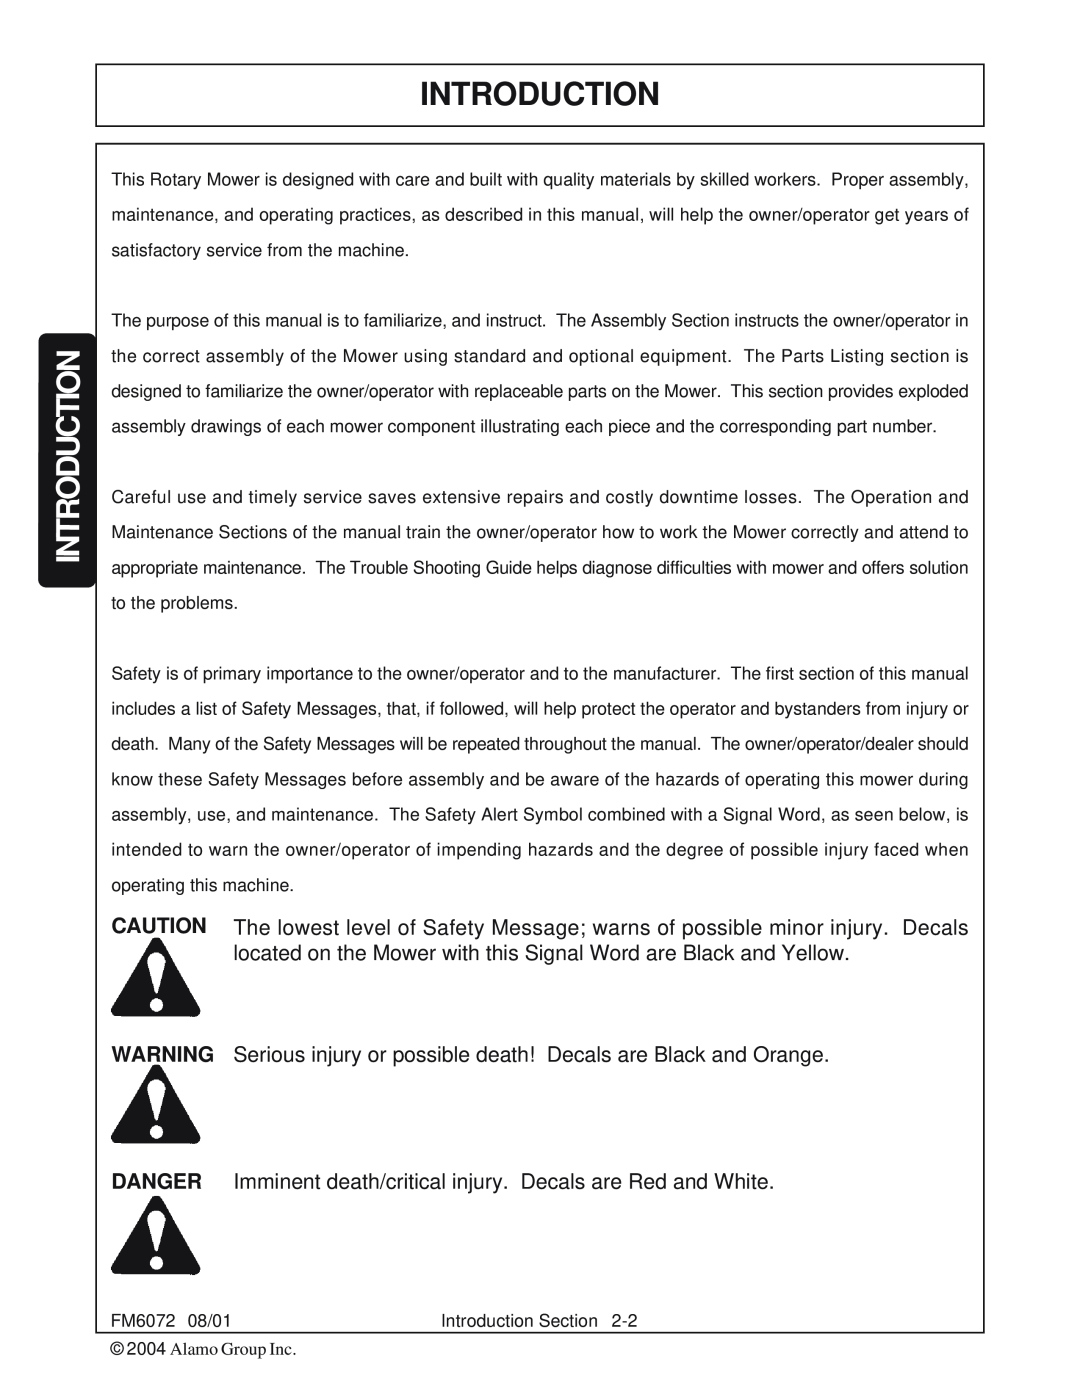 Servis-Rhino FM60/72 manual Introduction 